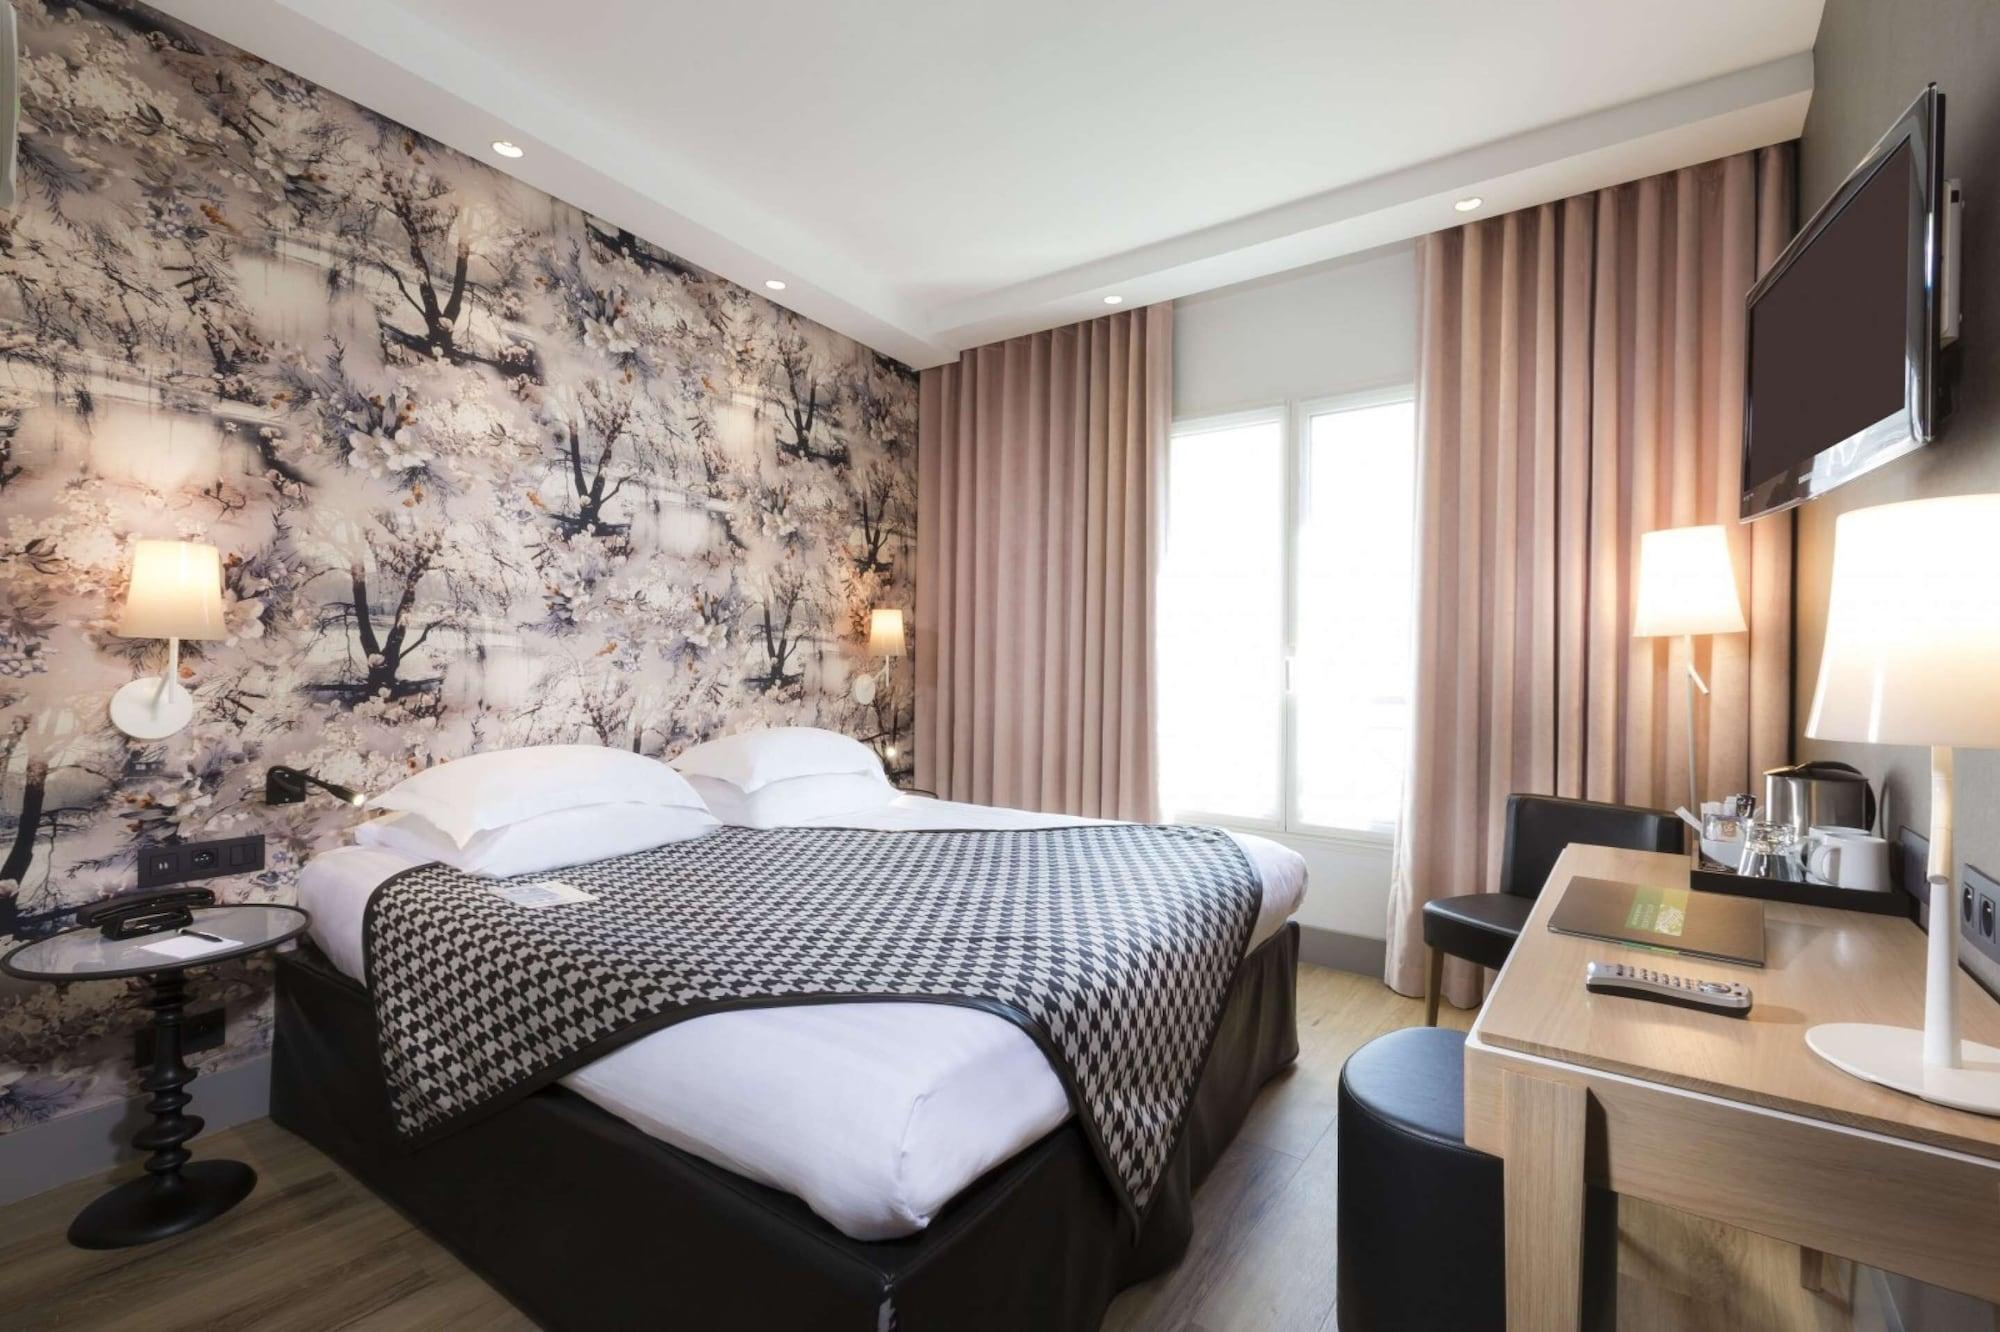 Hotel Acanthe - Boulogne Billancourt Exterior foto